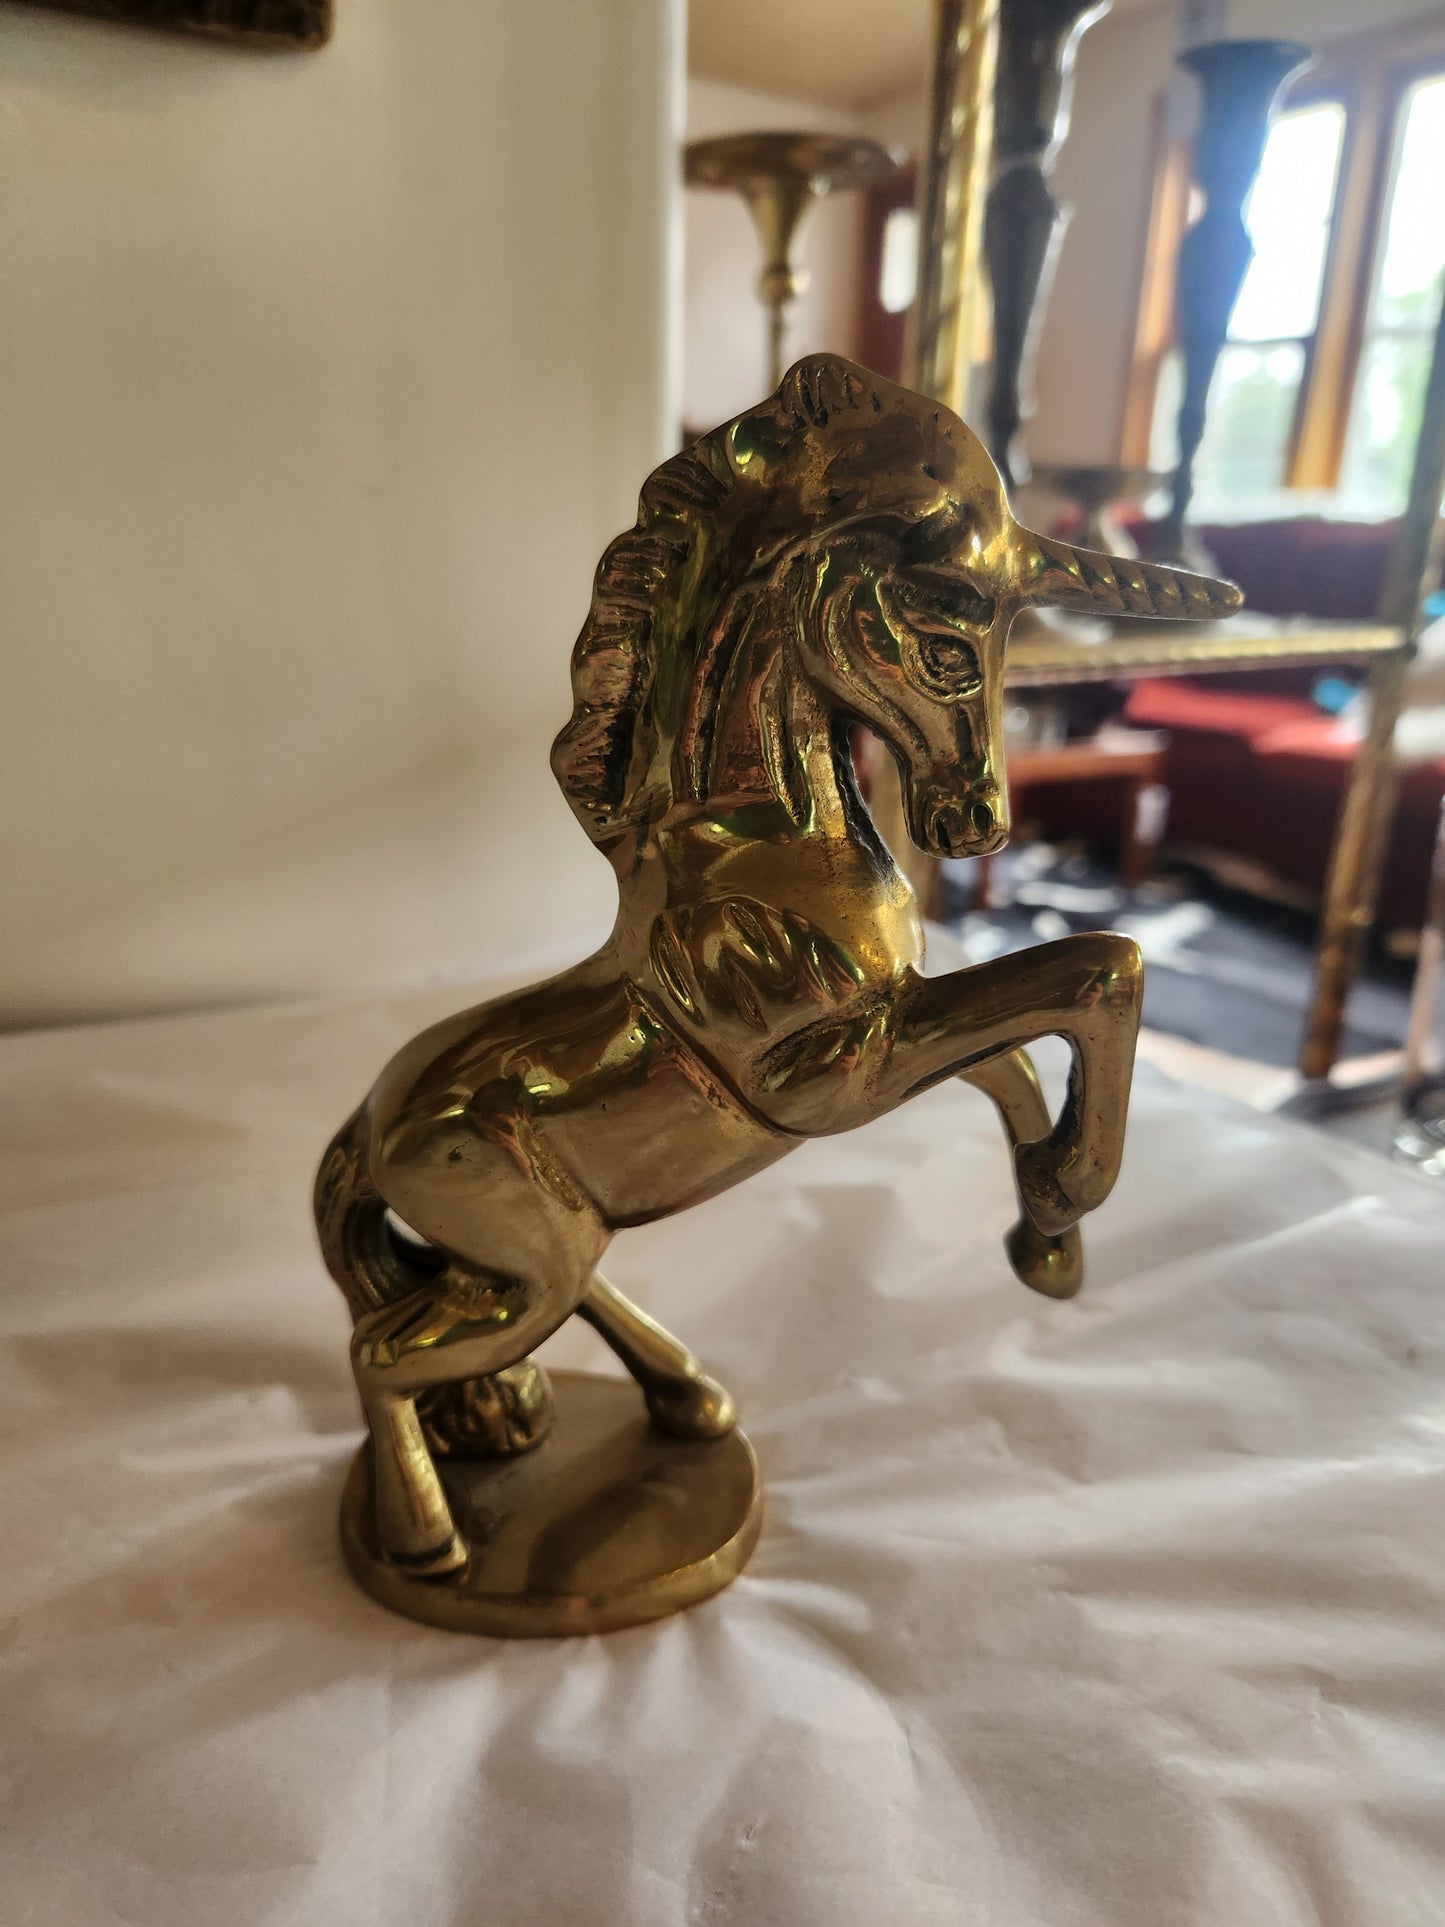 Large Brass Unicorn